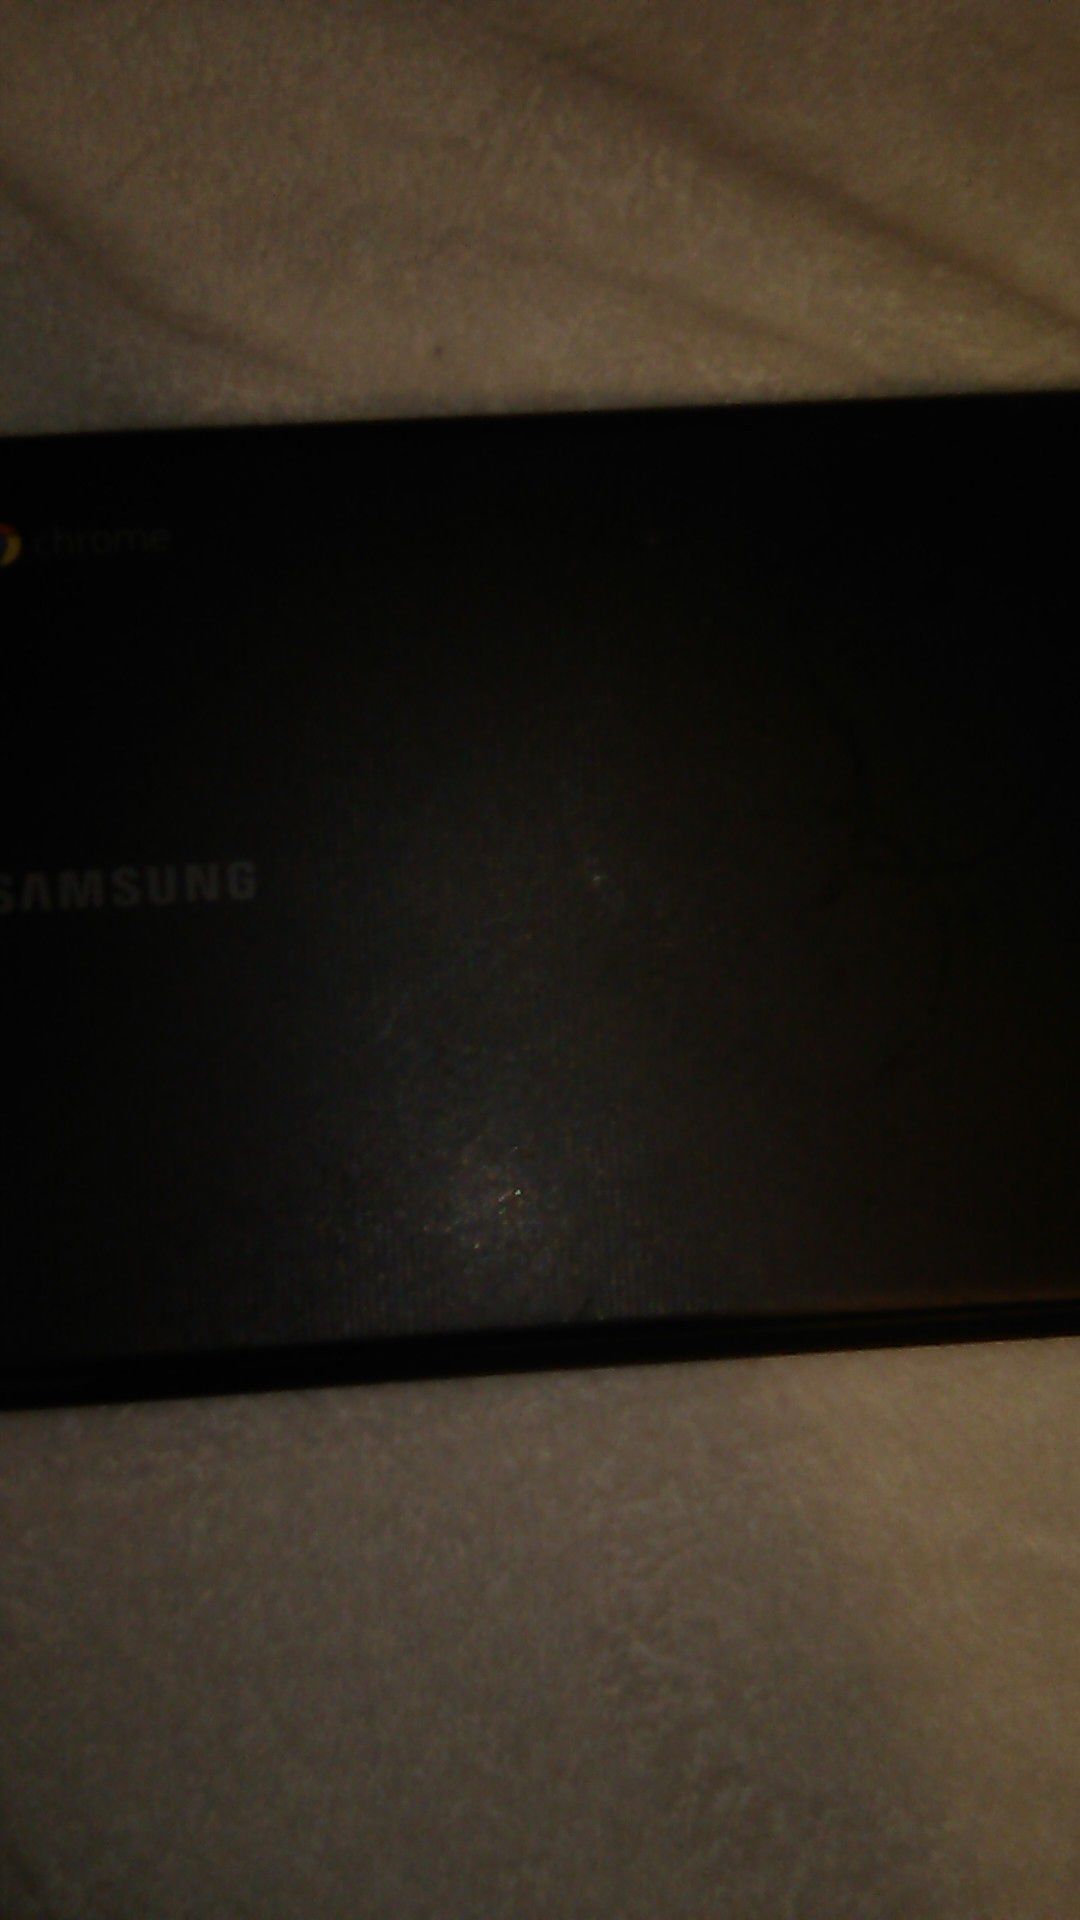 Samsung crome book